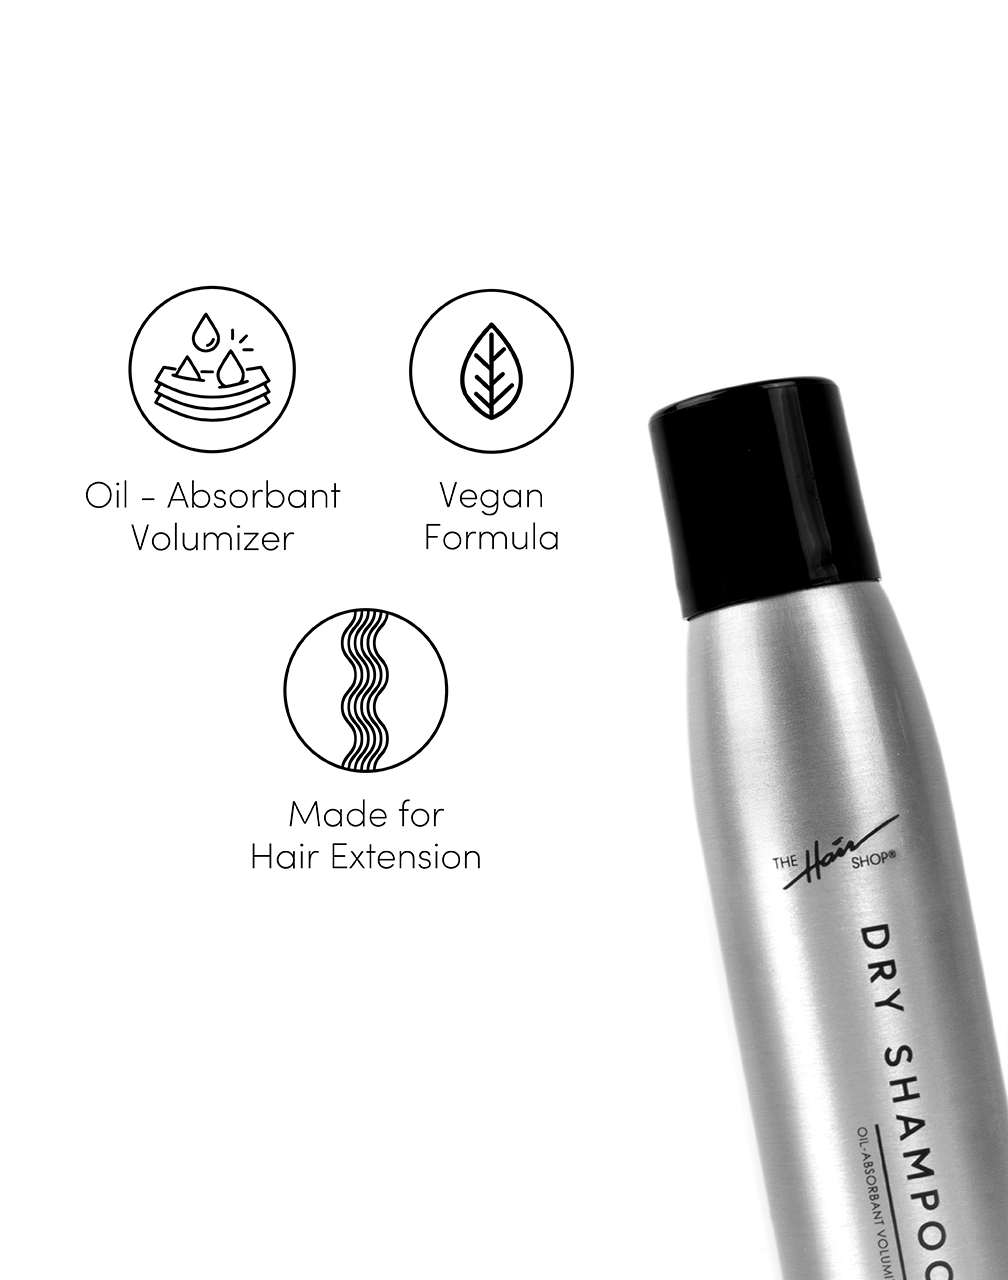 Dry Shampoo. Oil-absorbant volumizer. Vegan formula. Made for hair extension.